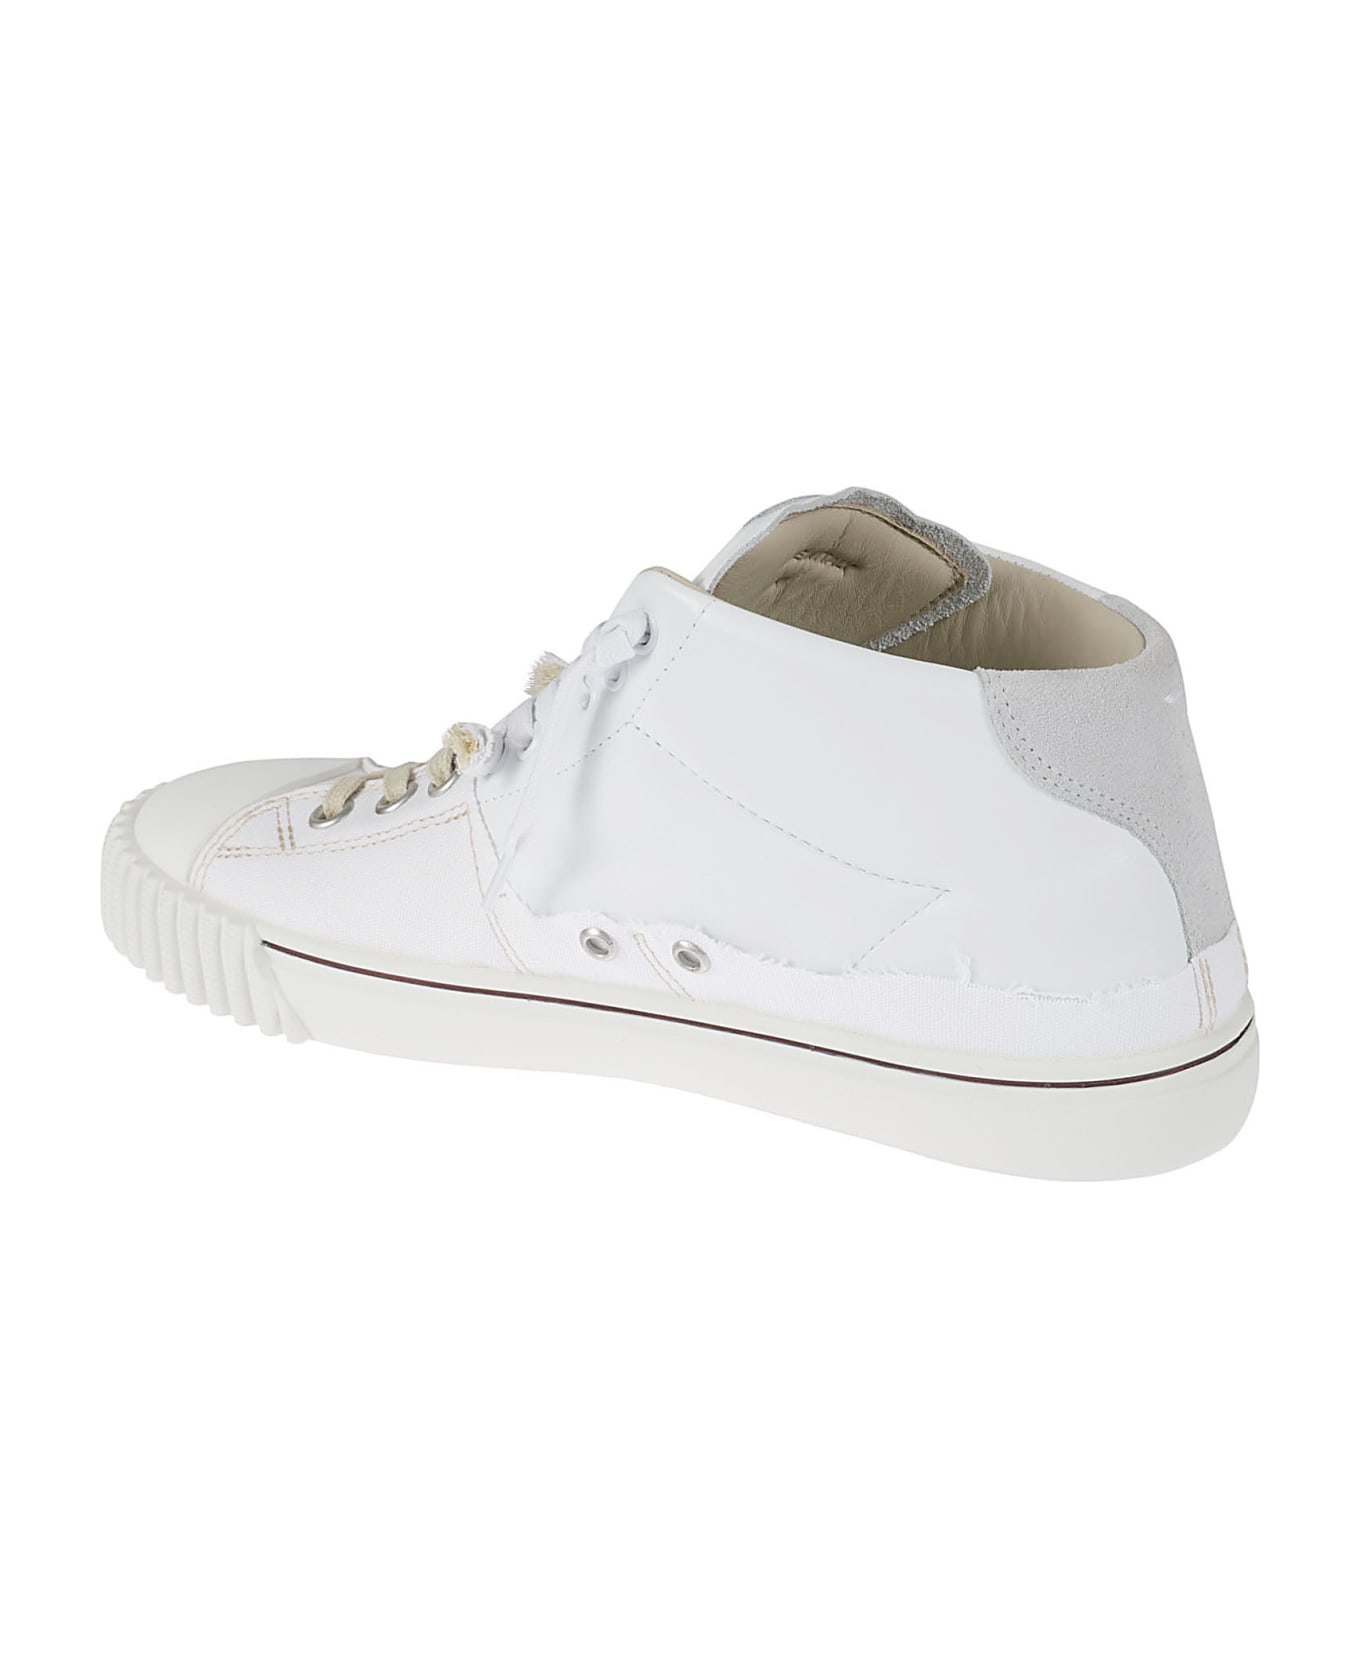 Maison Margiela Evolution Mid Sneakers - White Off White